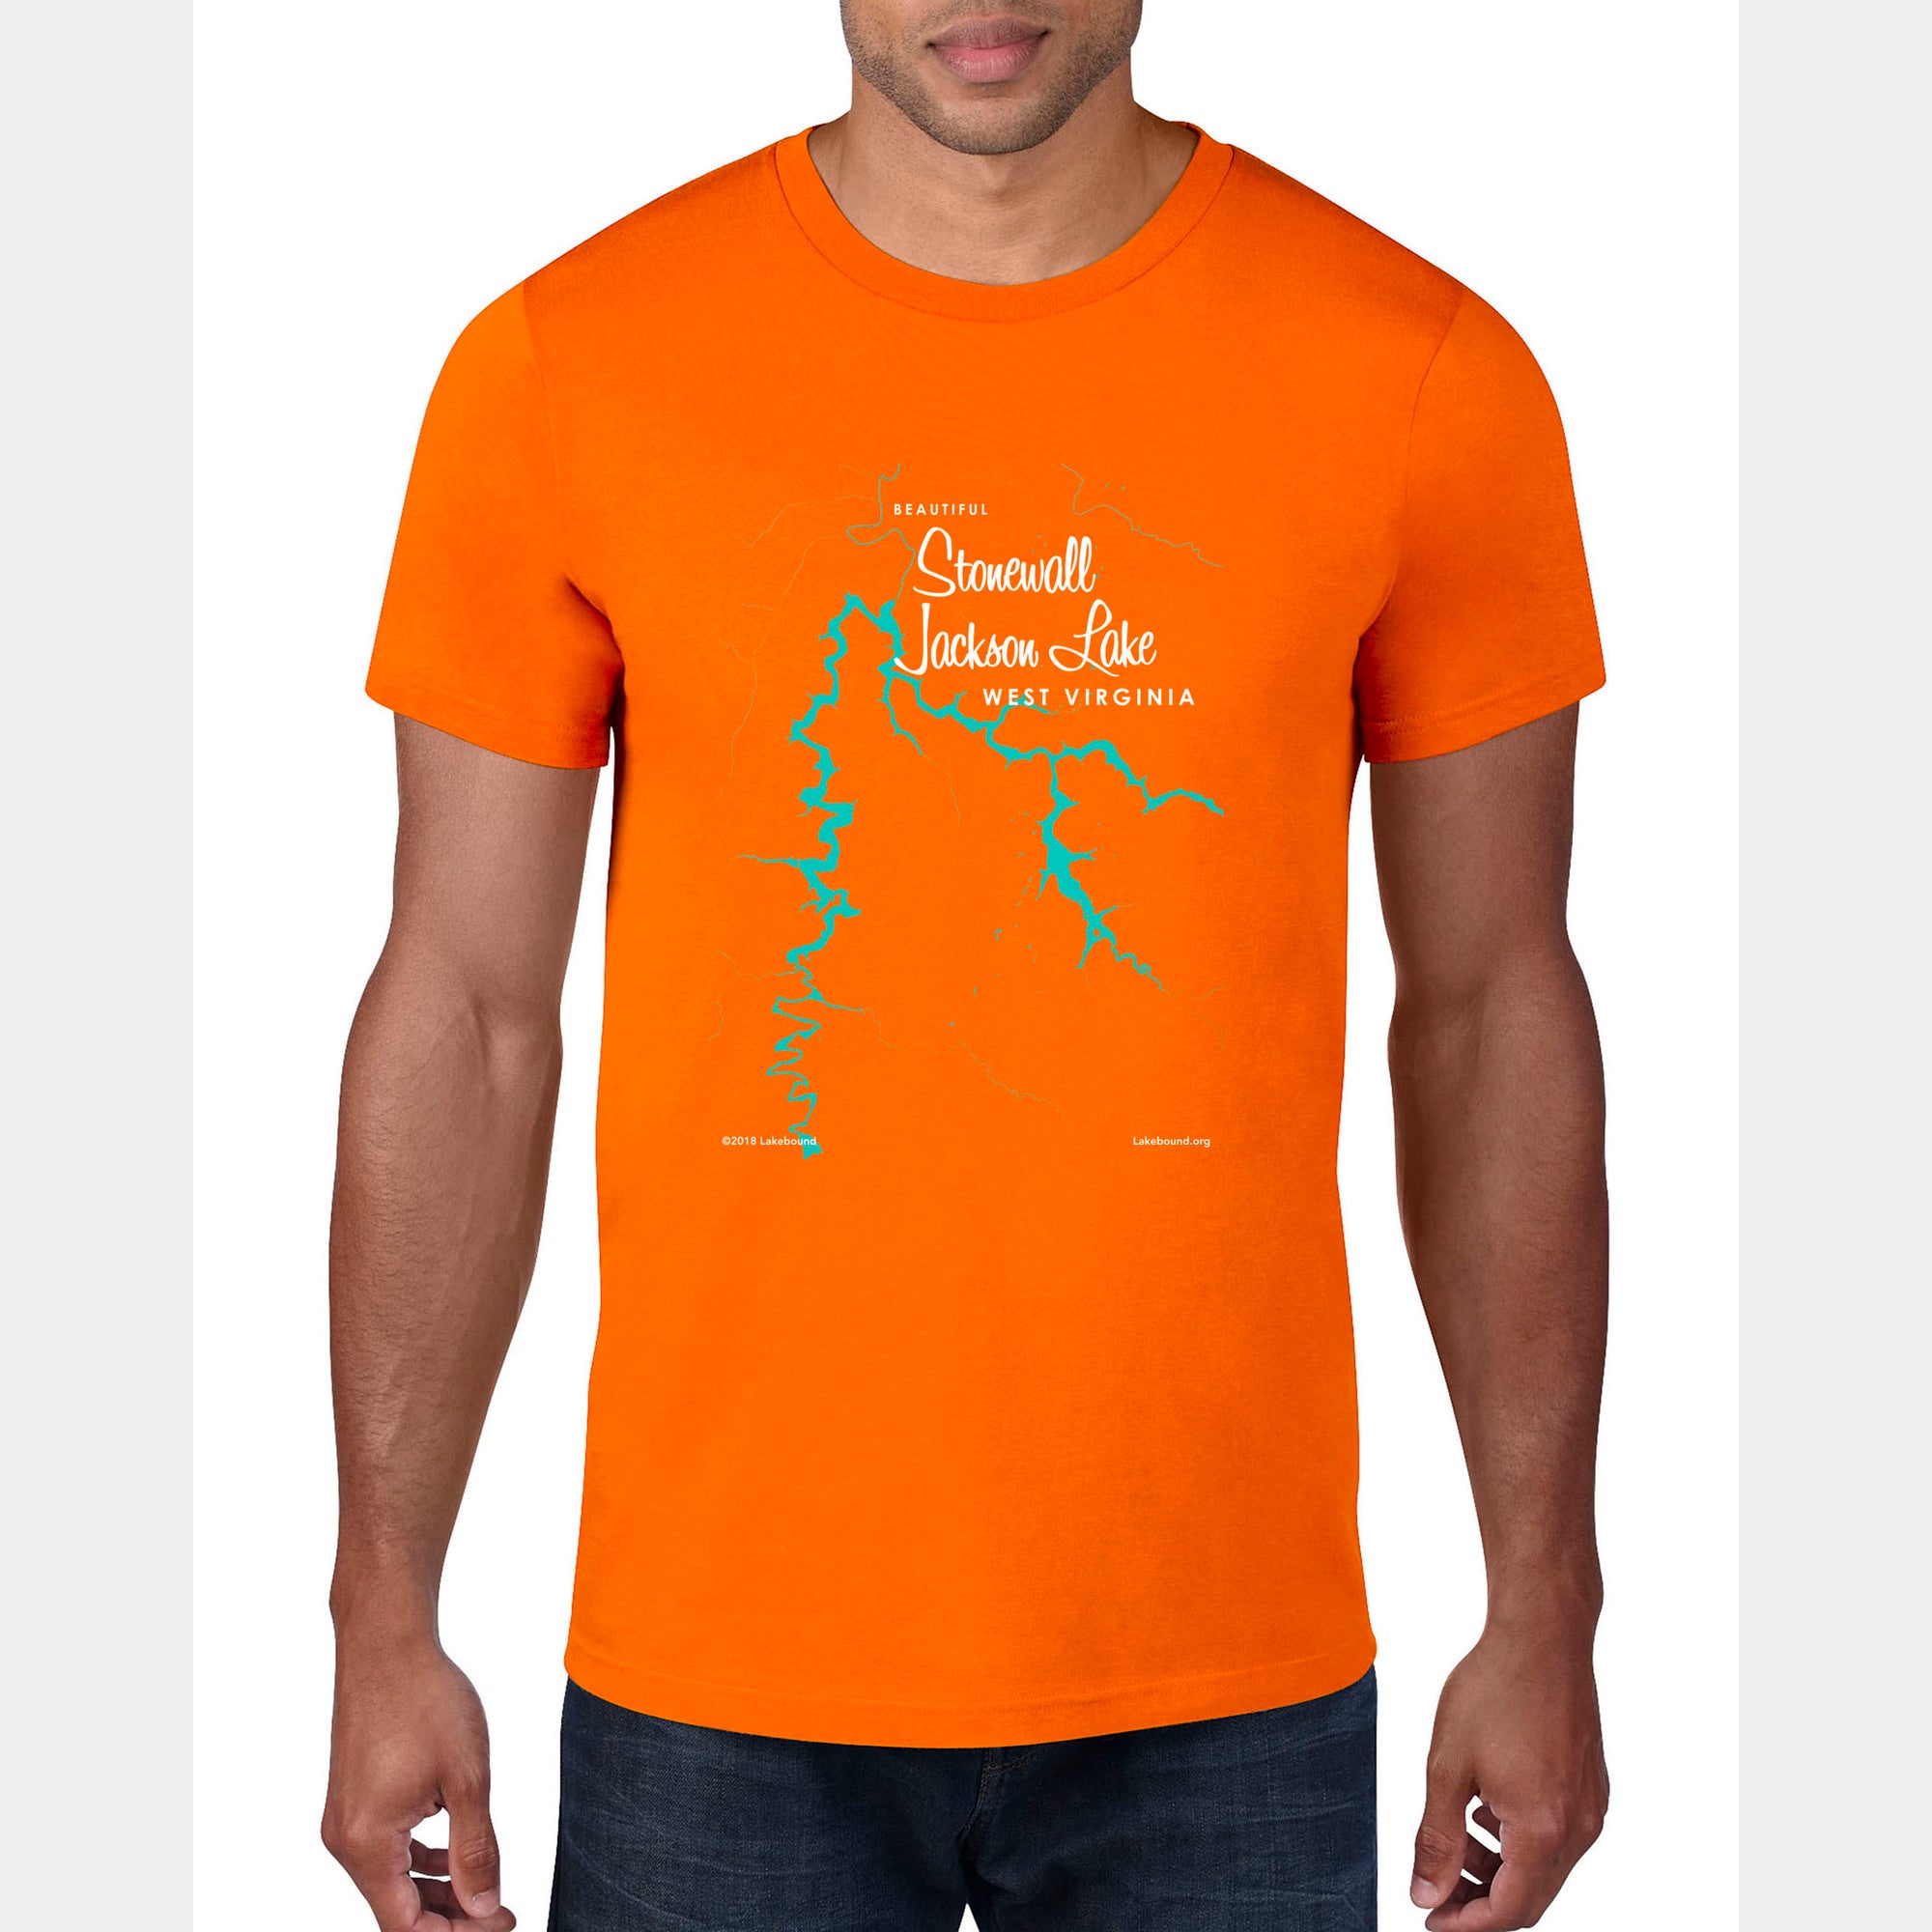 Stonewall Jackson Lake West Virginia, T-Shirt